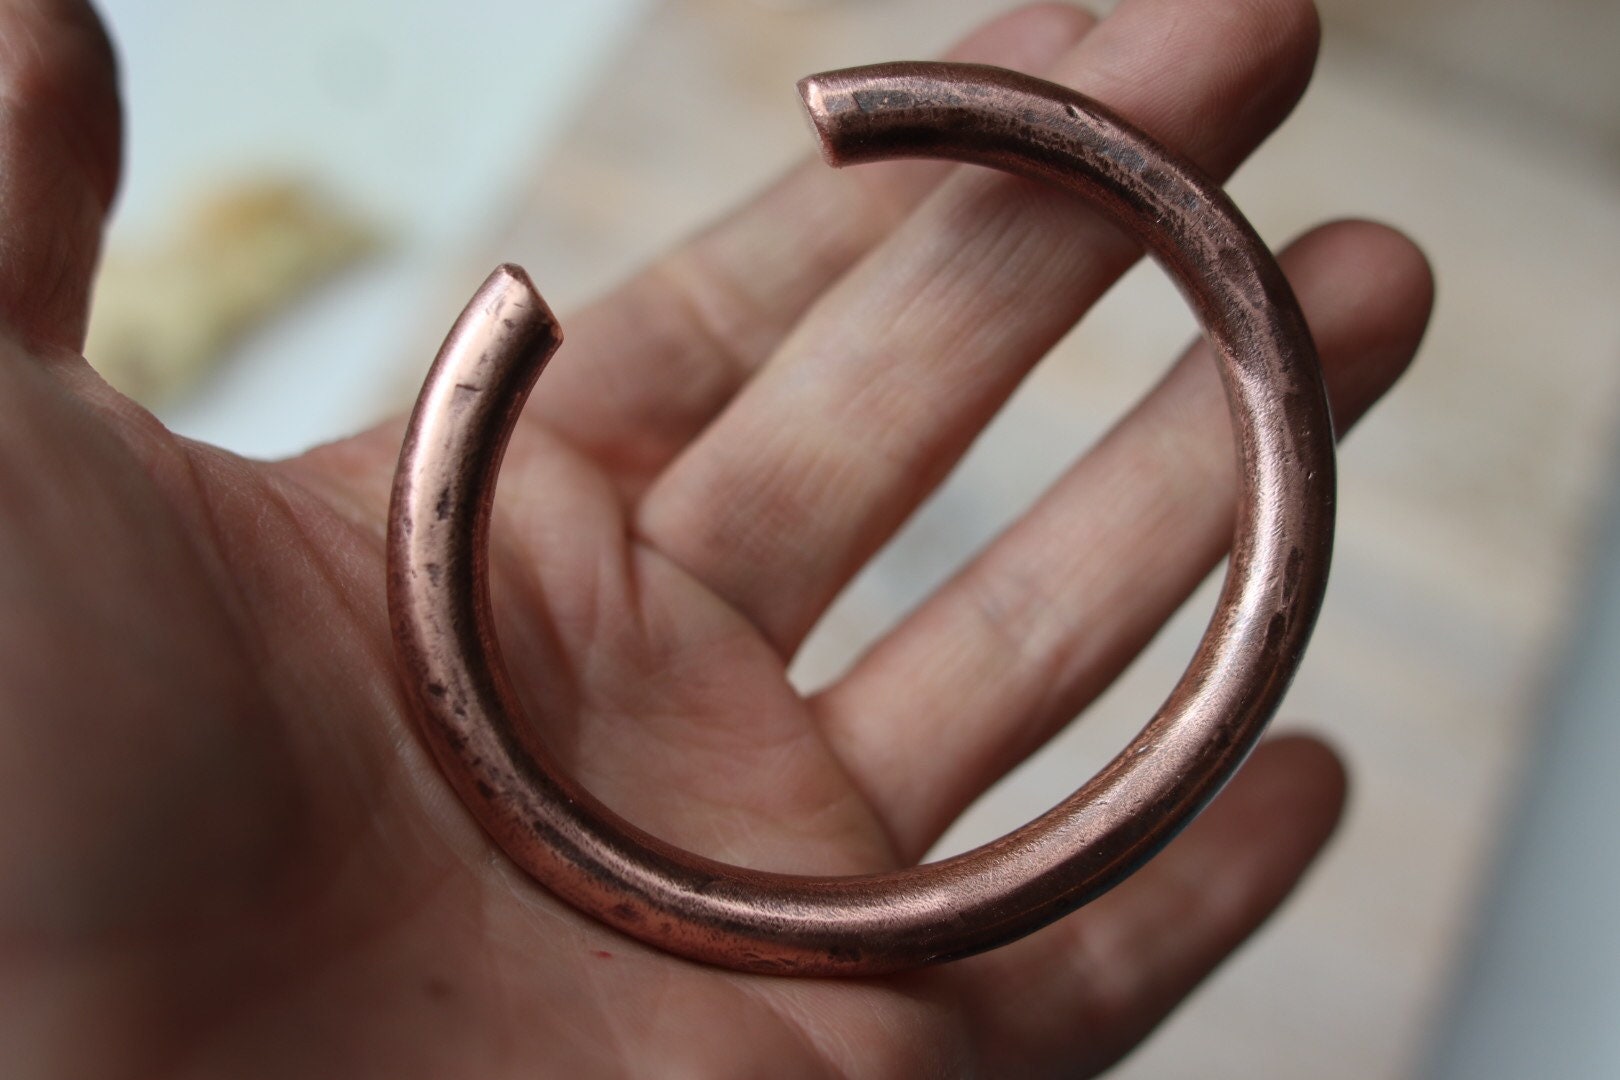 Chunky Celtic Copper Bracelet (UNISEX) – Bijoux Chics Jewellery